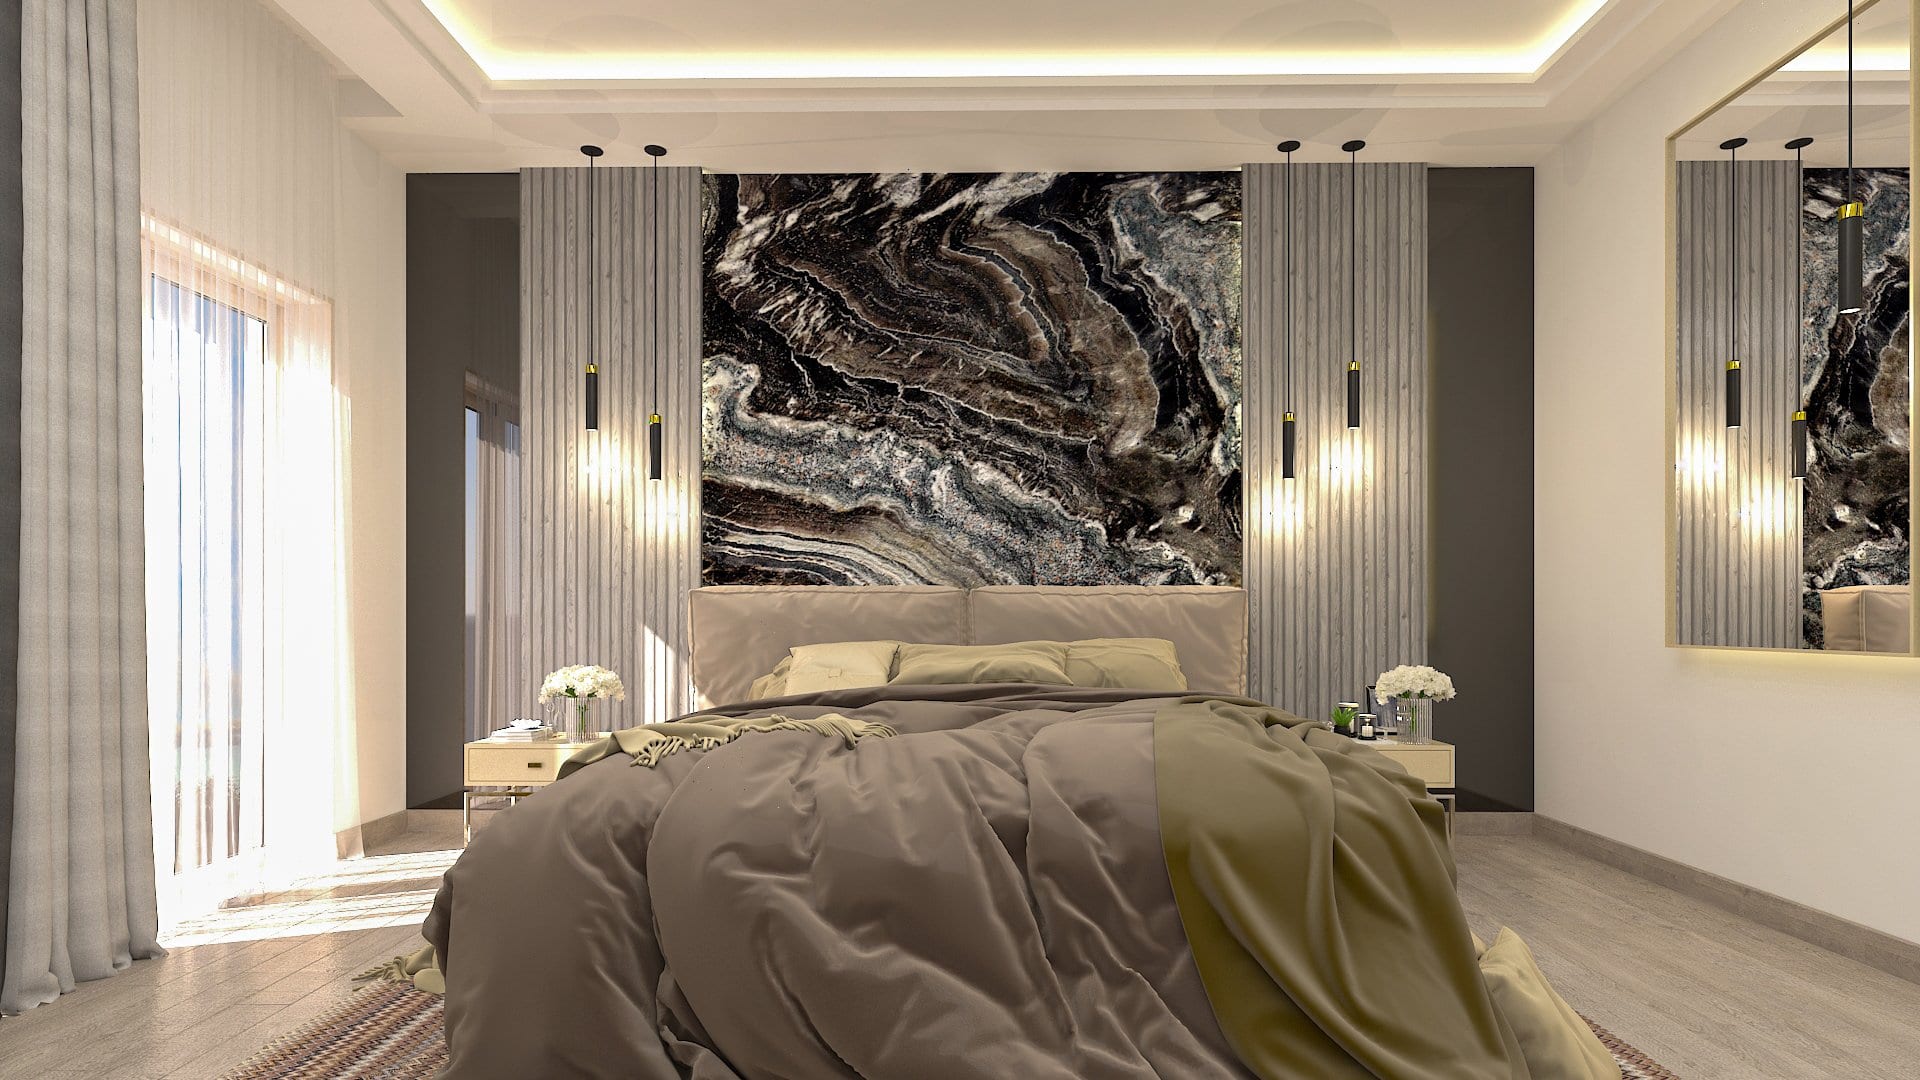 Marble-Adorned Luxury Bedroom Interior Design